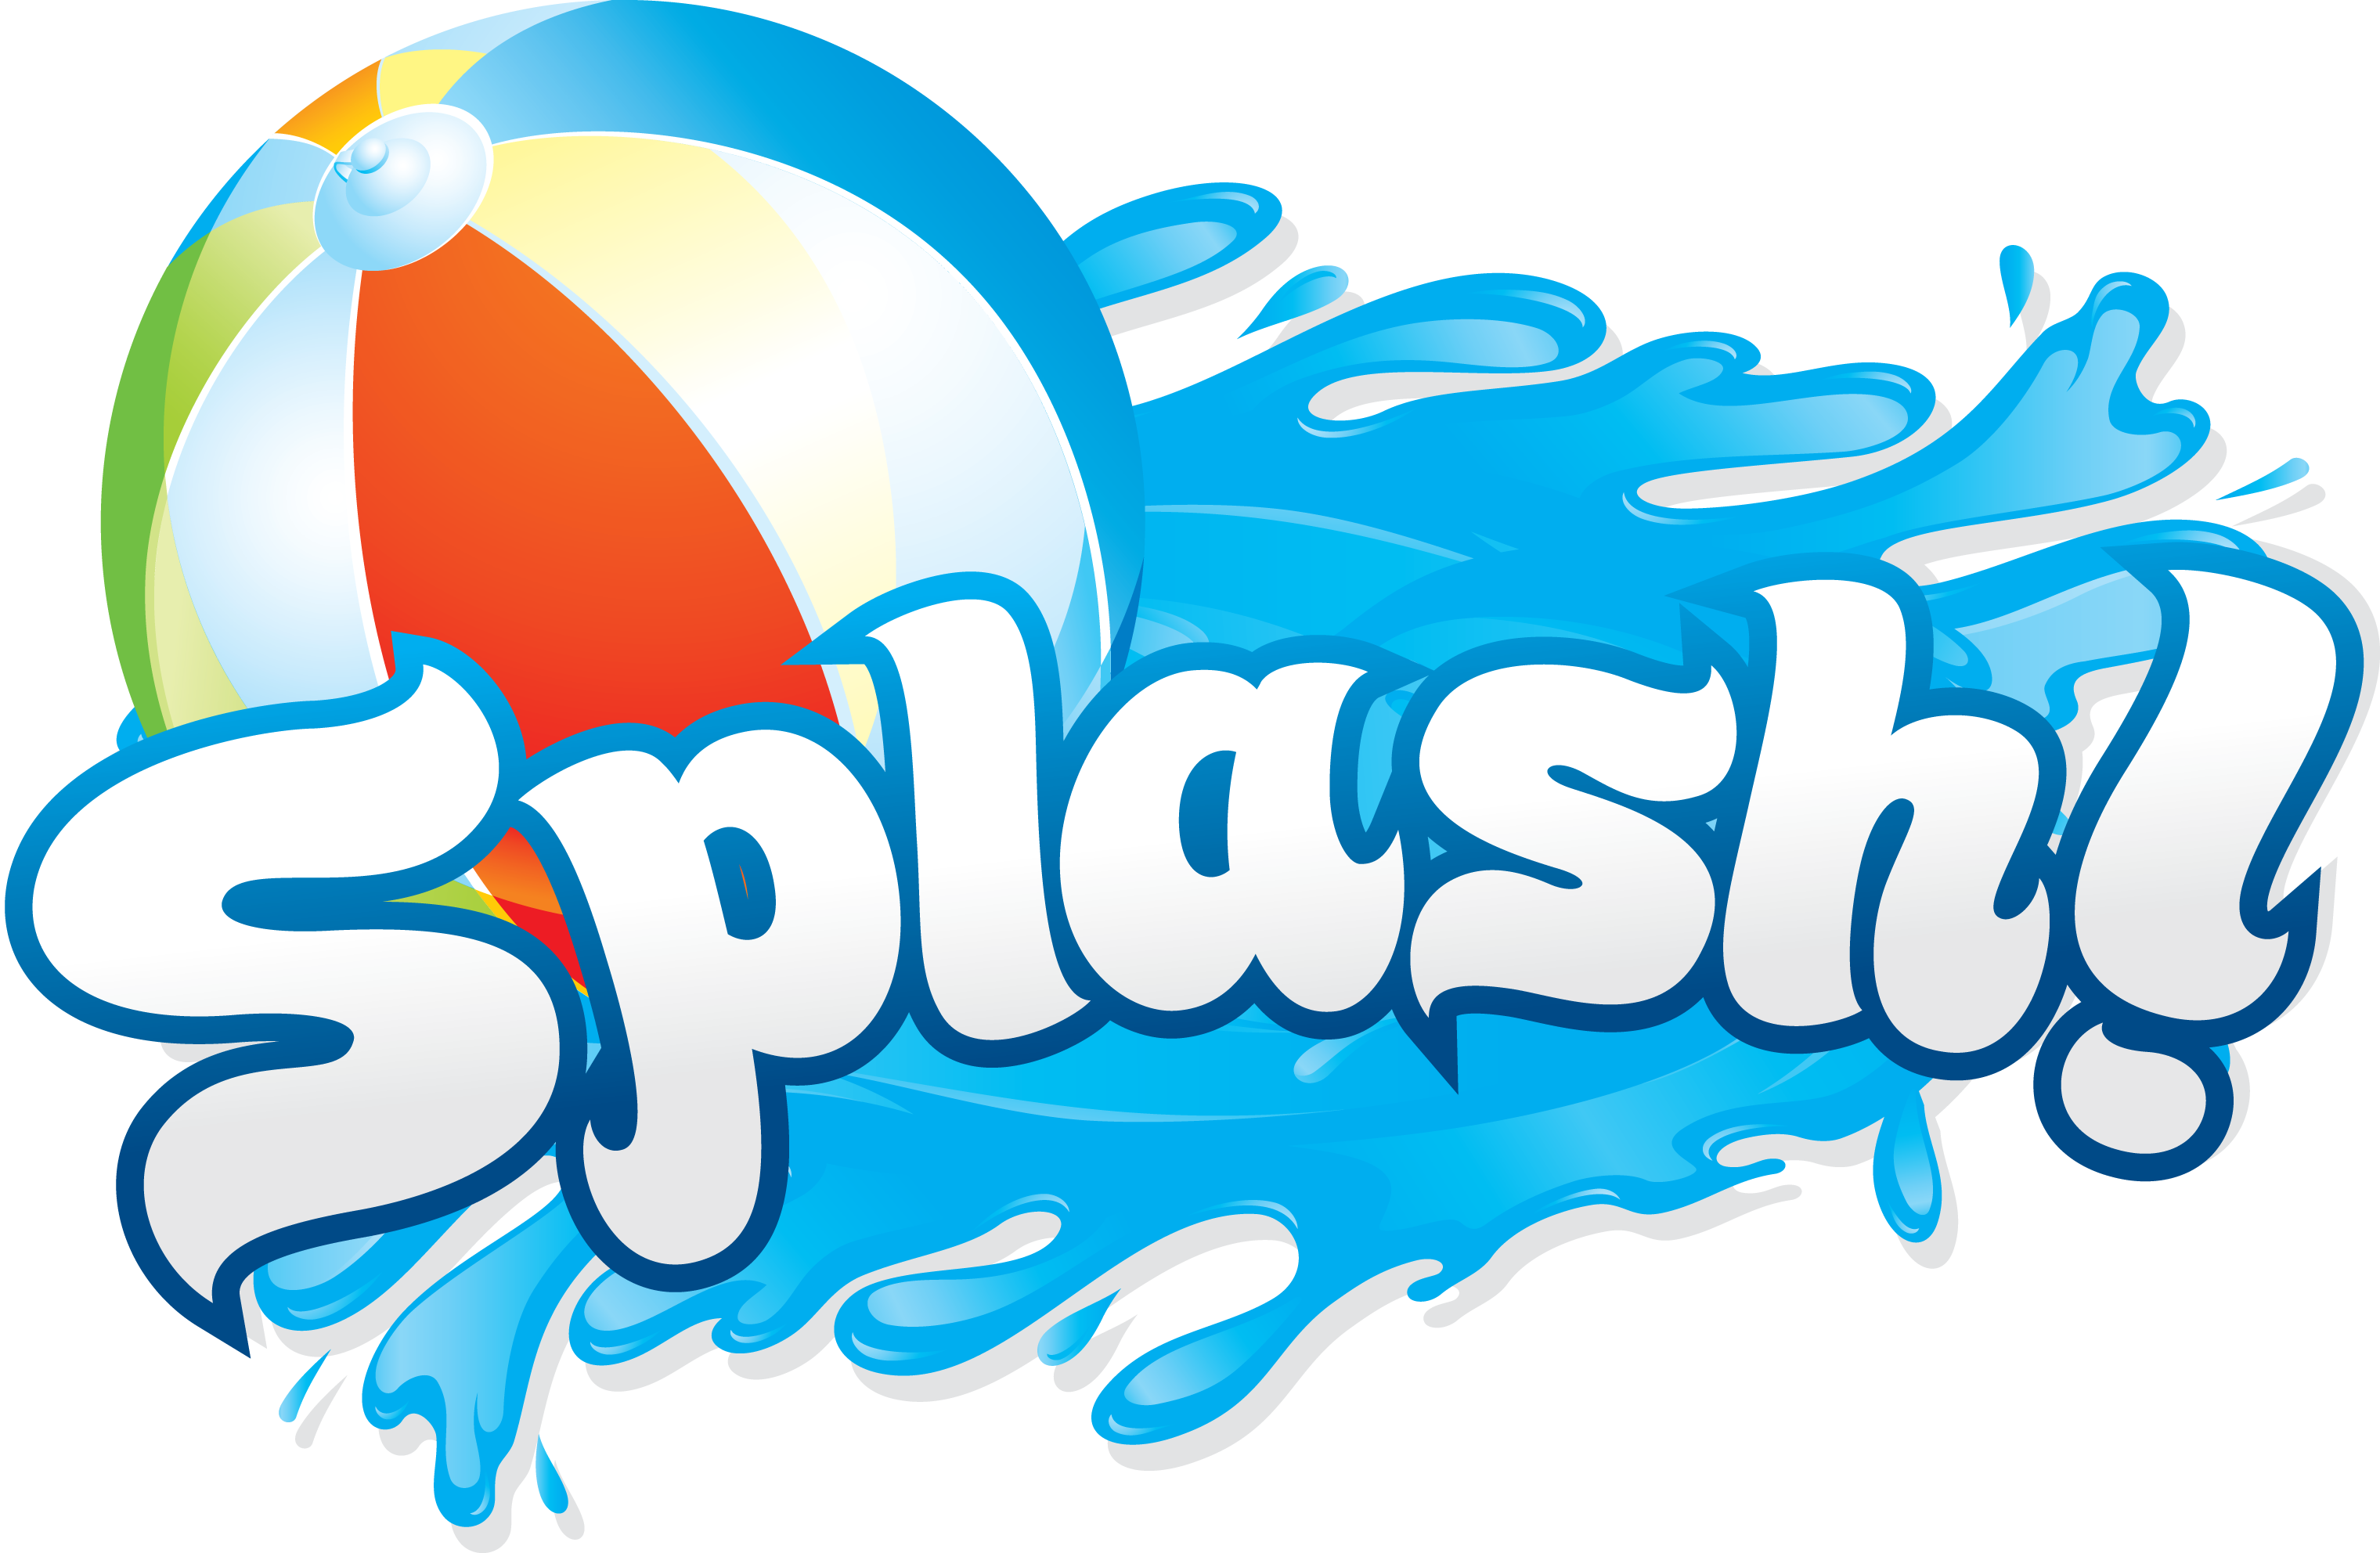 Splash Image Png - Clipart li